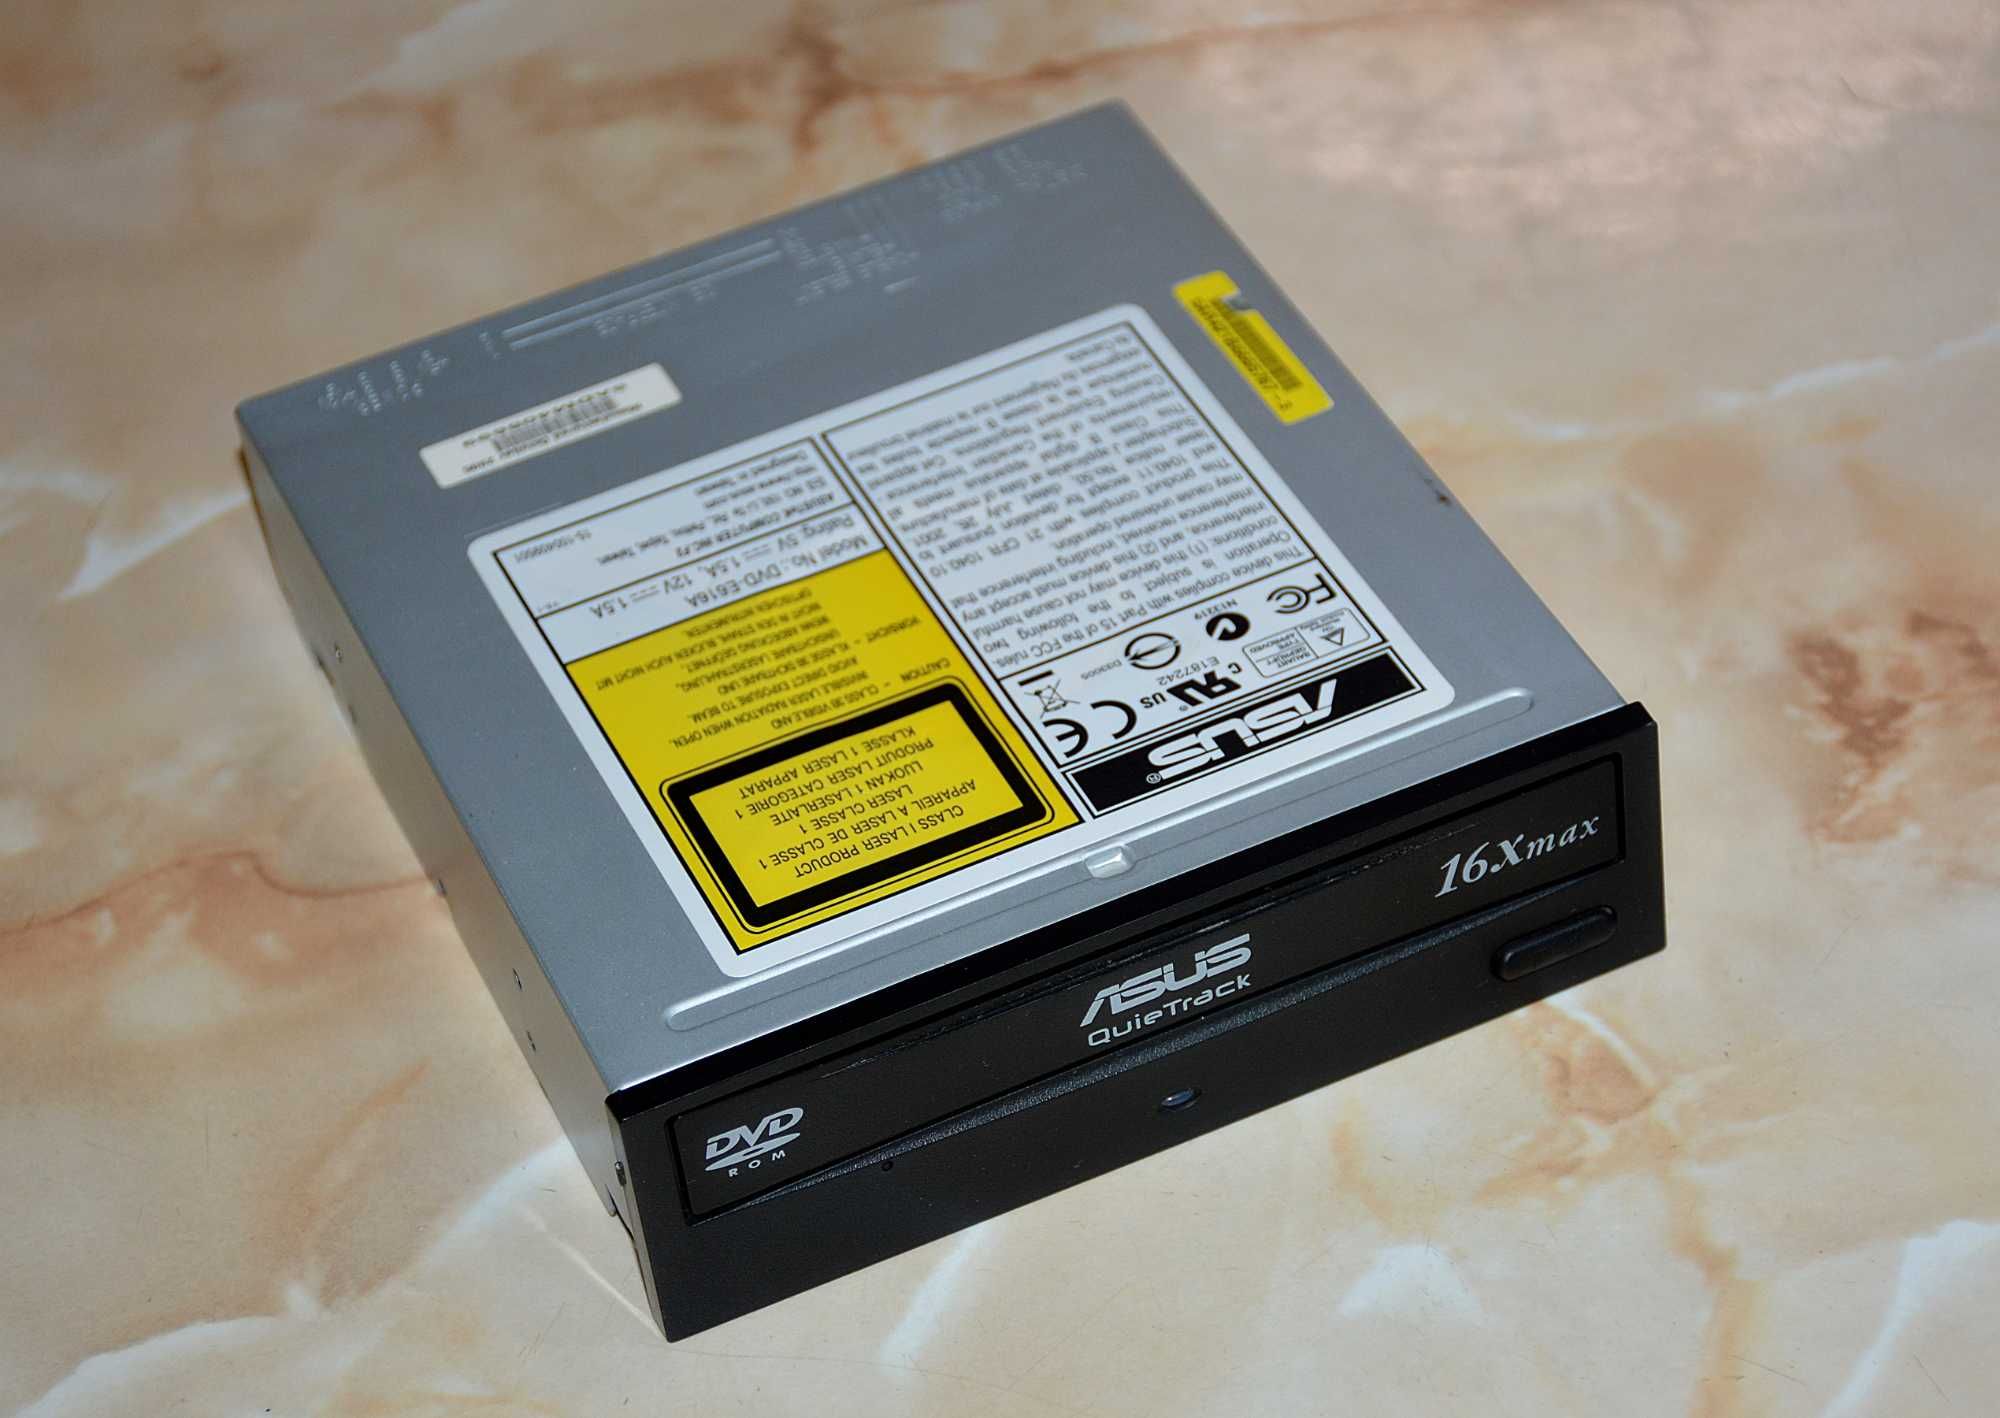 Оптический привод Asus DVD-E616A